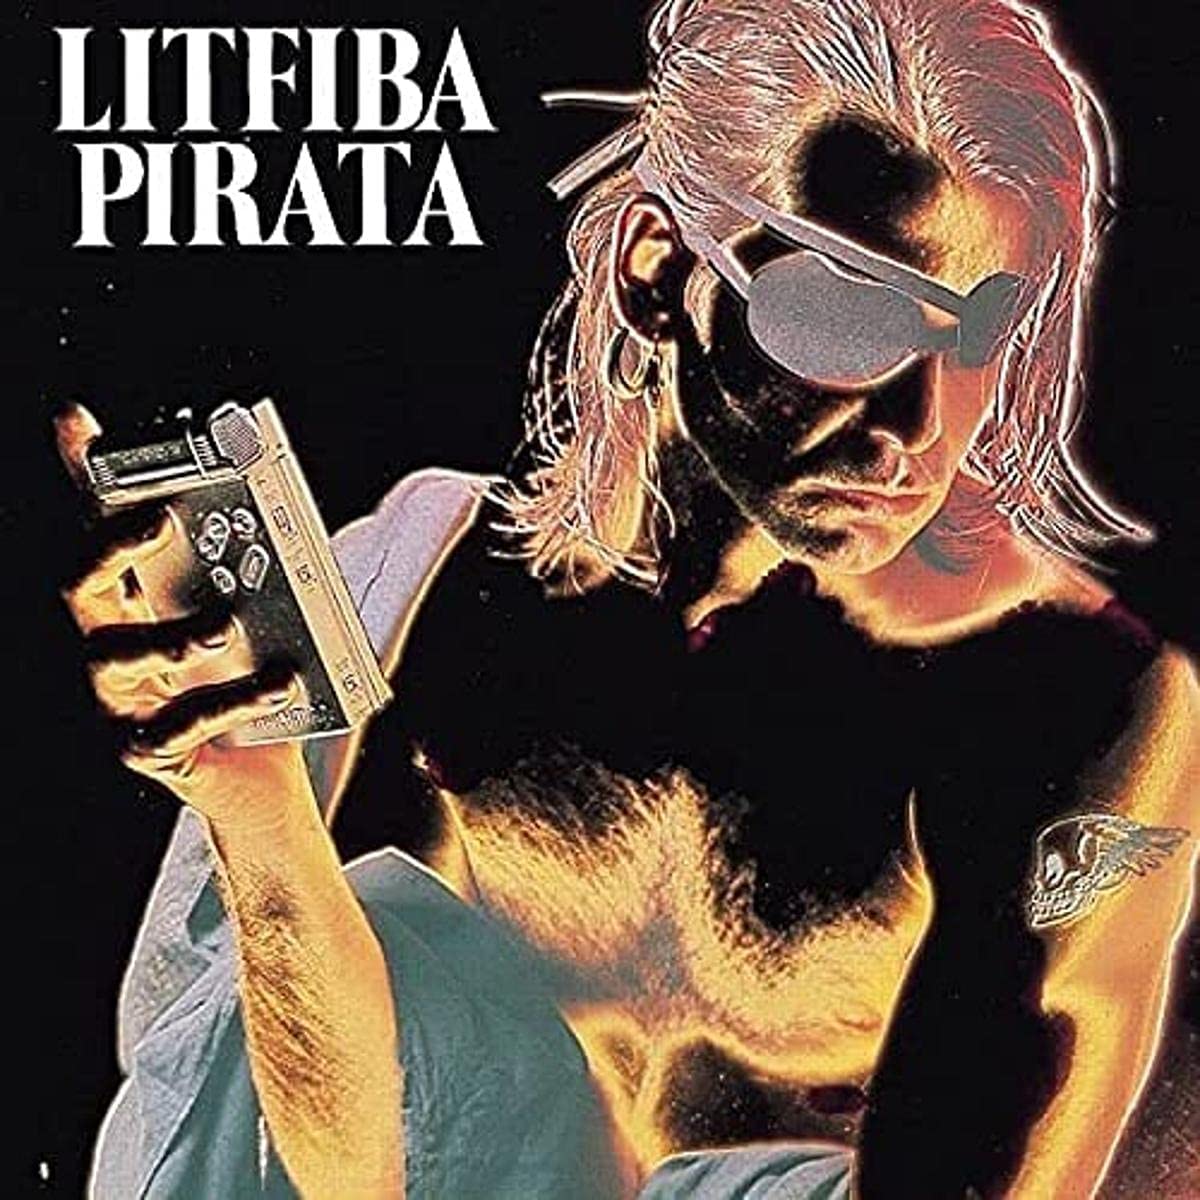 Copertina Vinile 33 giri Pirata di Litfiba